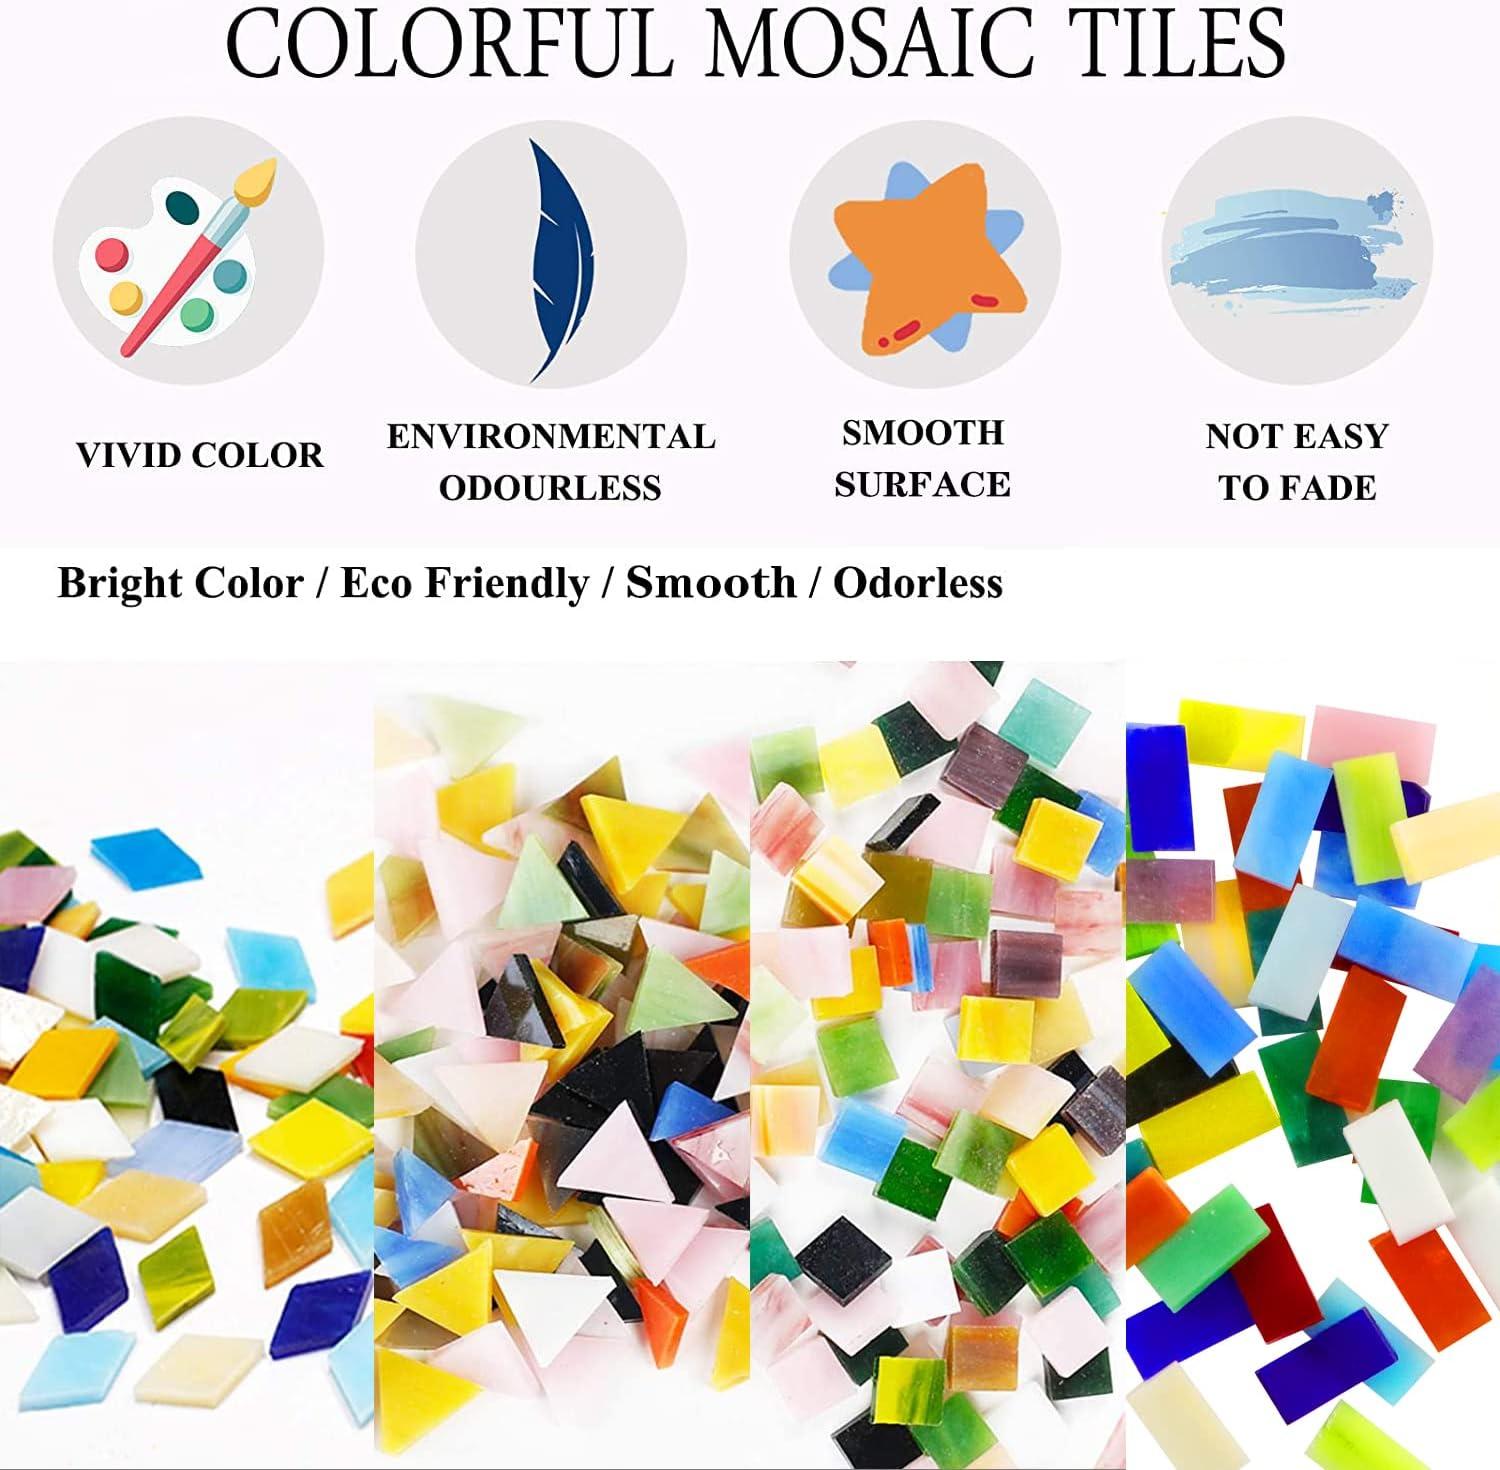 Wholesale OLYCRAFT 30pcs Glass Mosaic Tiles 1 Inch Mosaic Glass